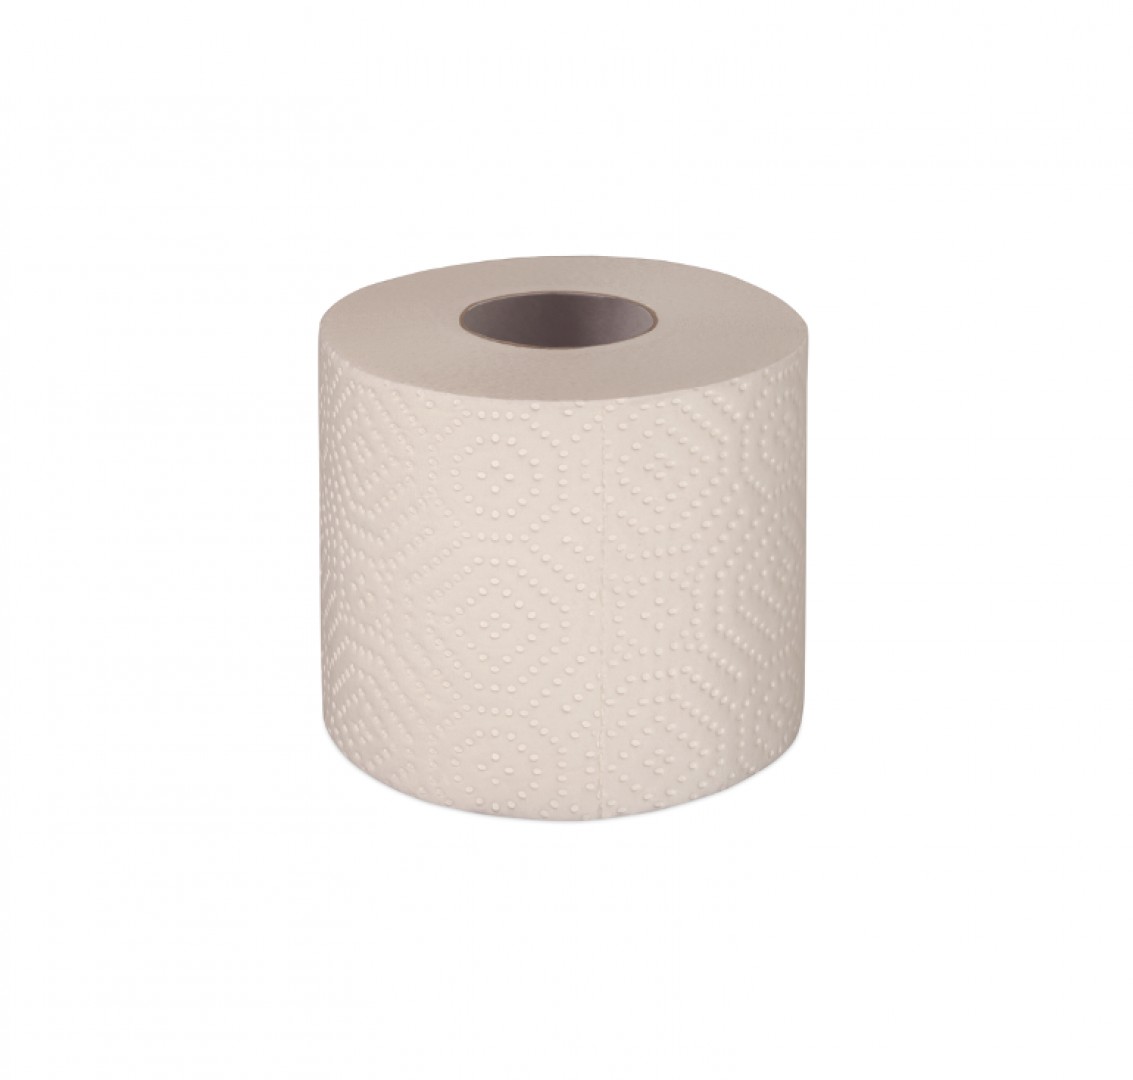 Toilettenpapier Kleinrolle, 4-lagig, 150 Blatt, Zellulose